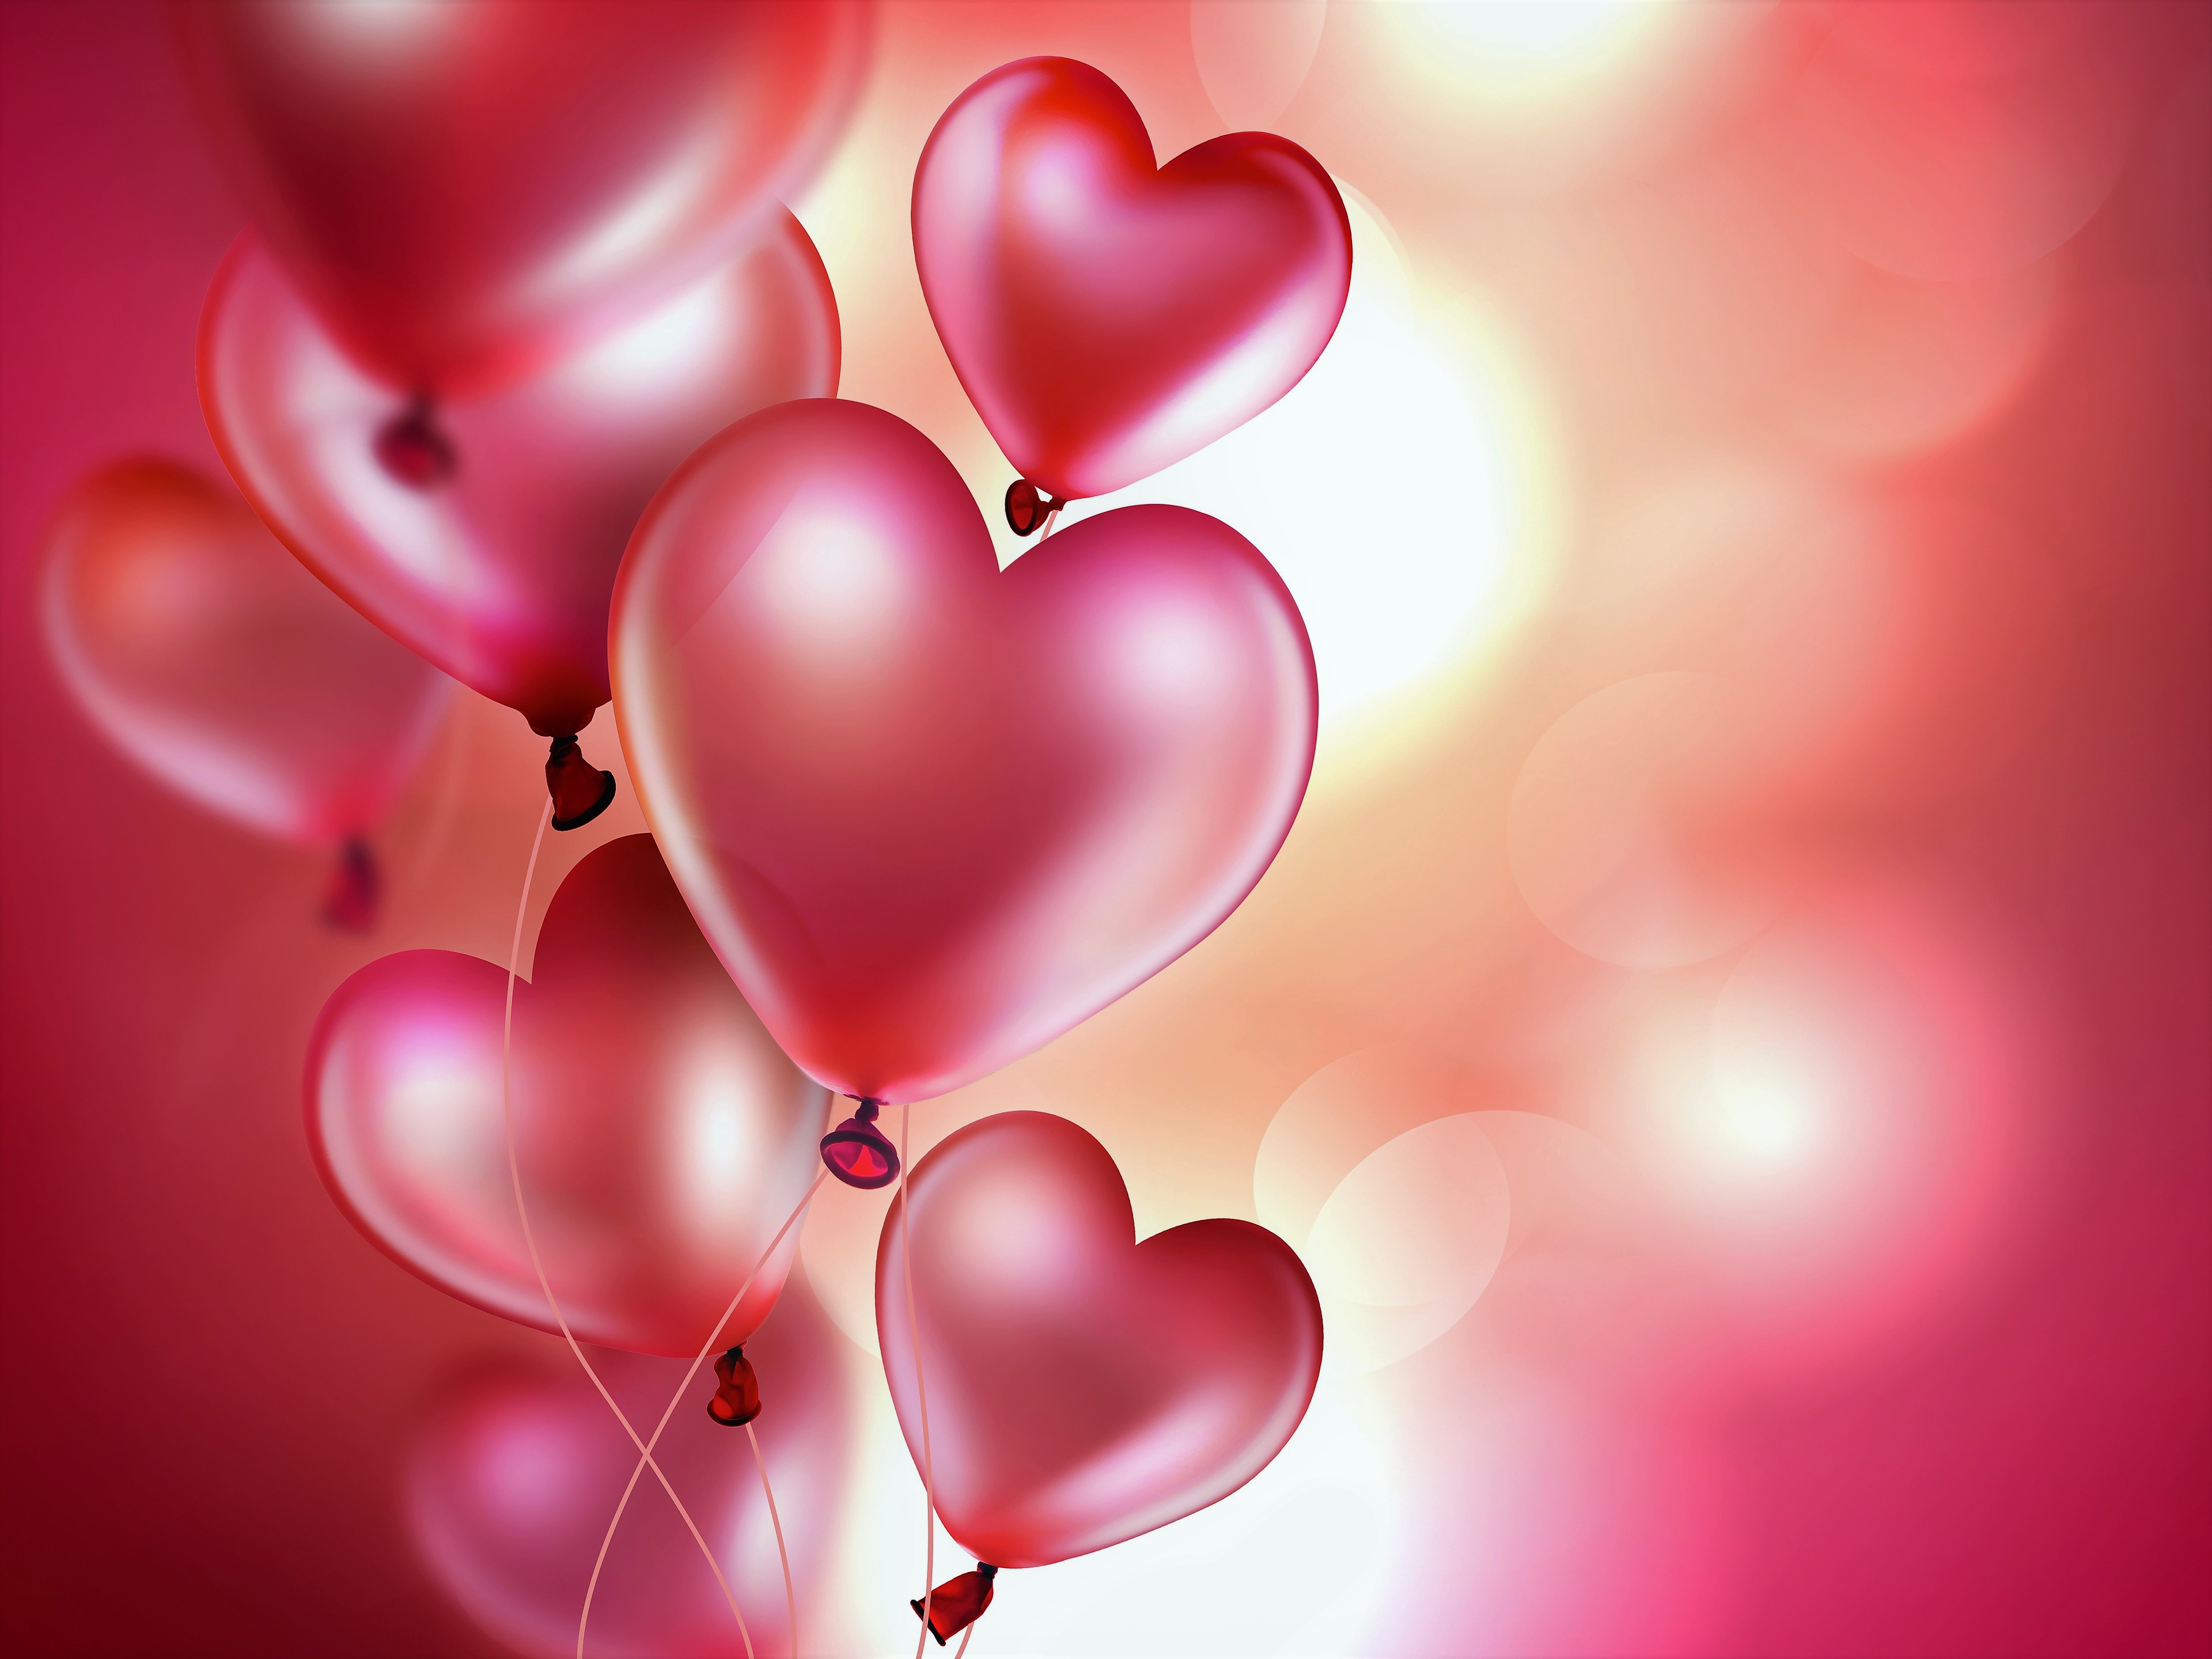 Balloon Heart Shaped Love Red 3840x2880